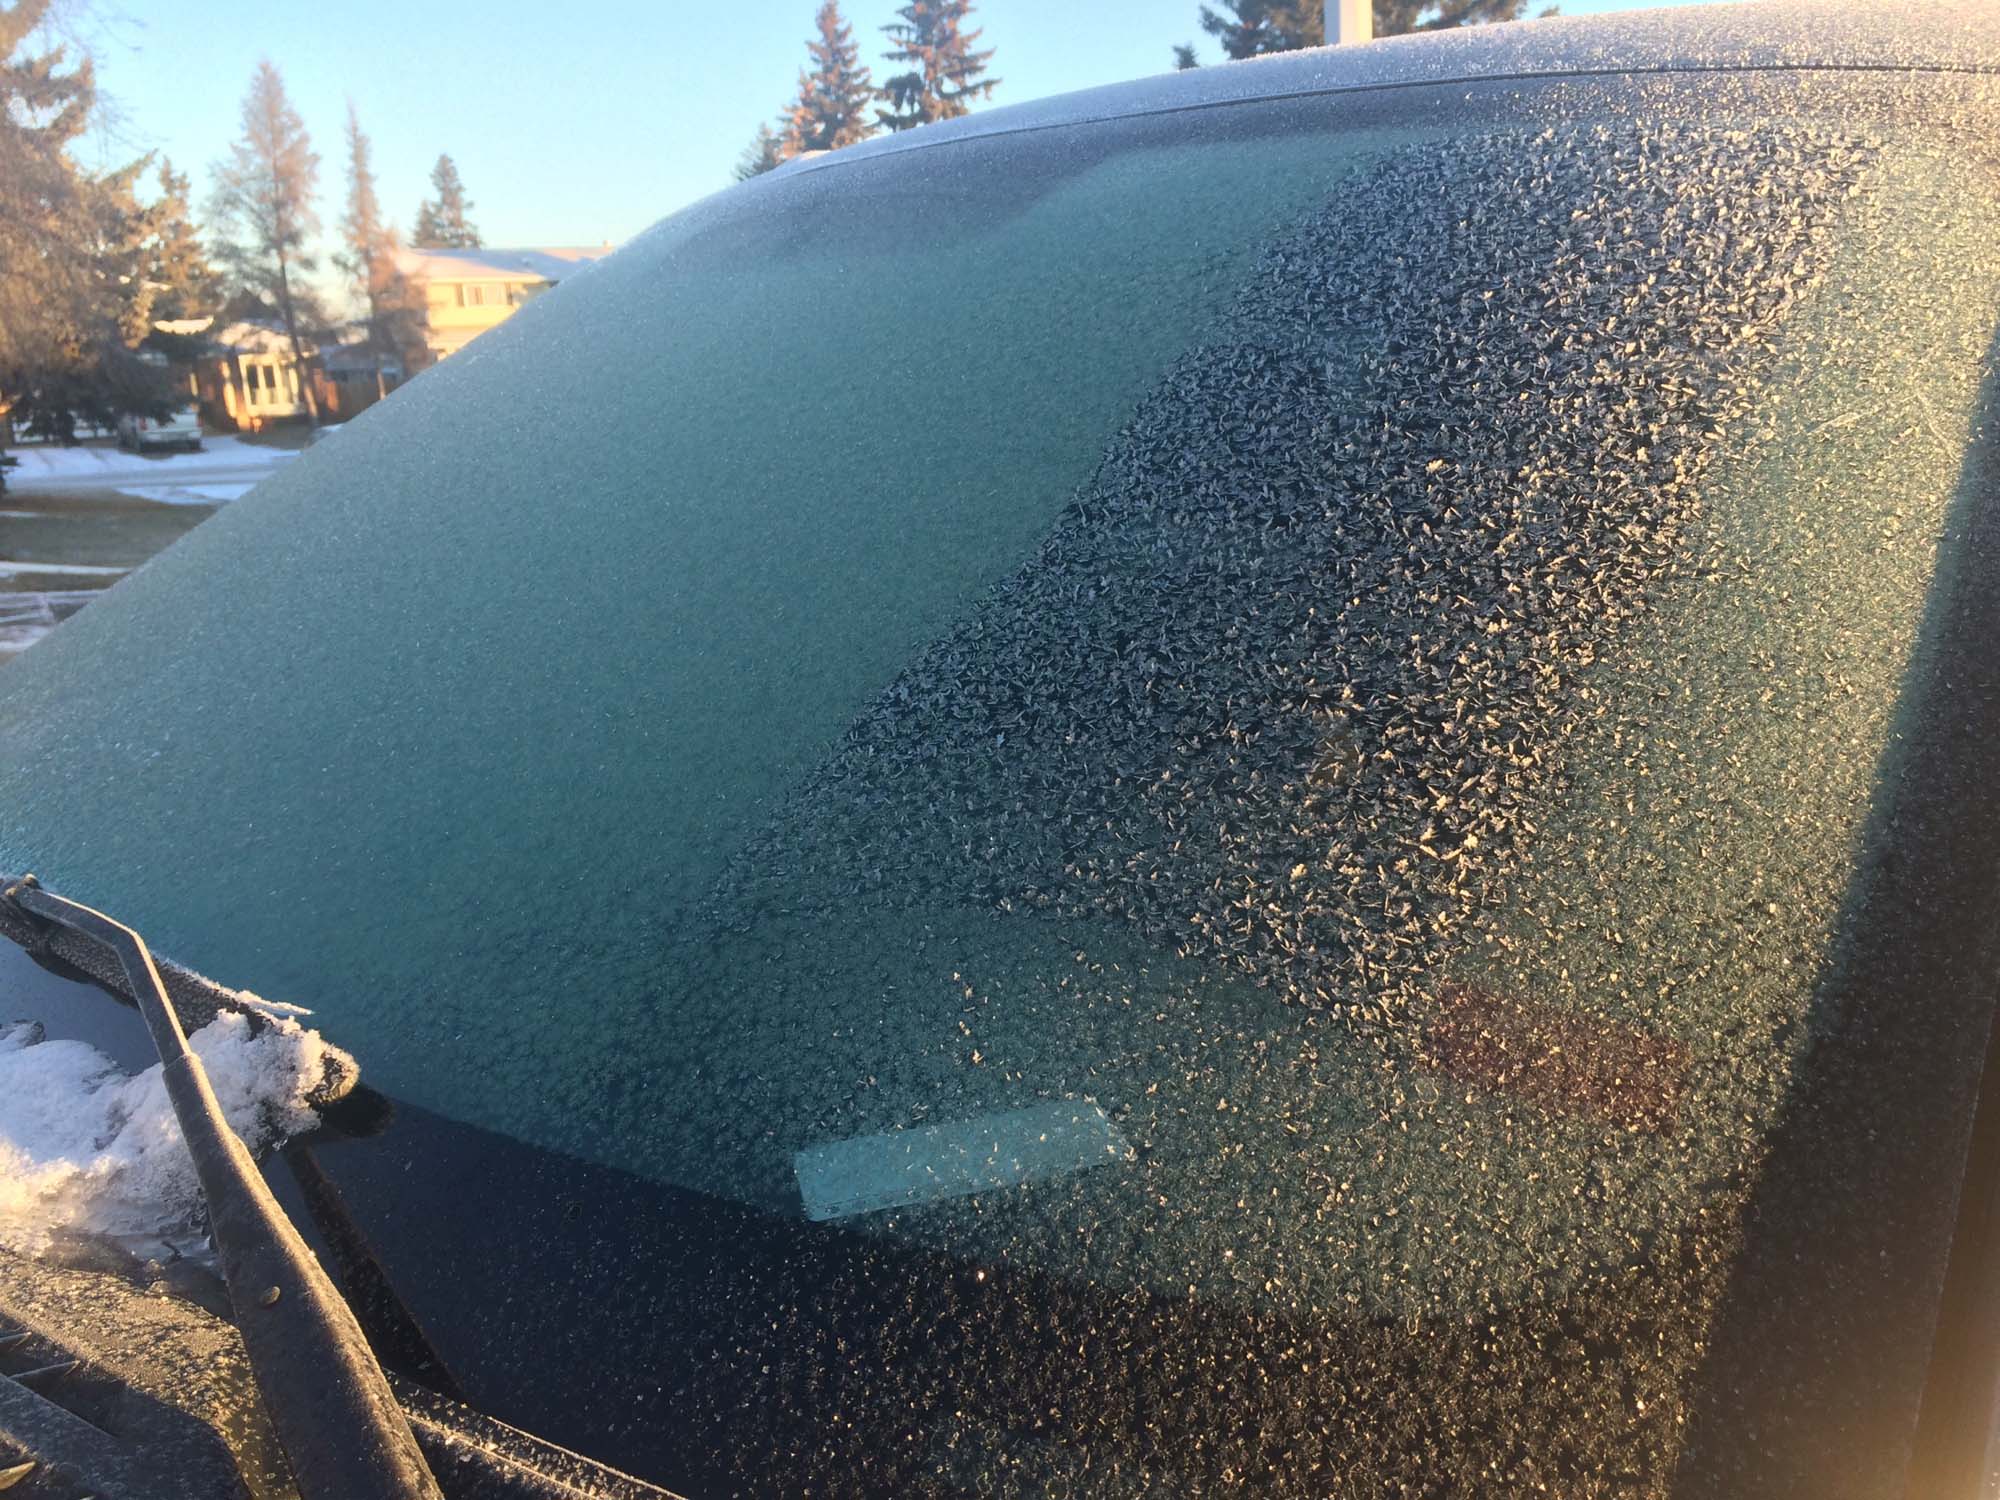 Ice on windshield with no nano coating